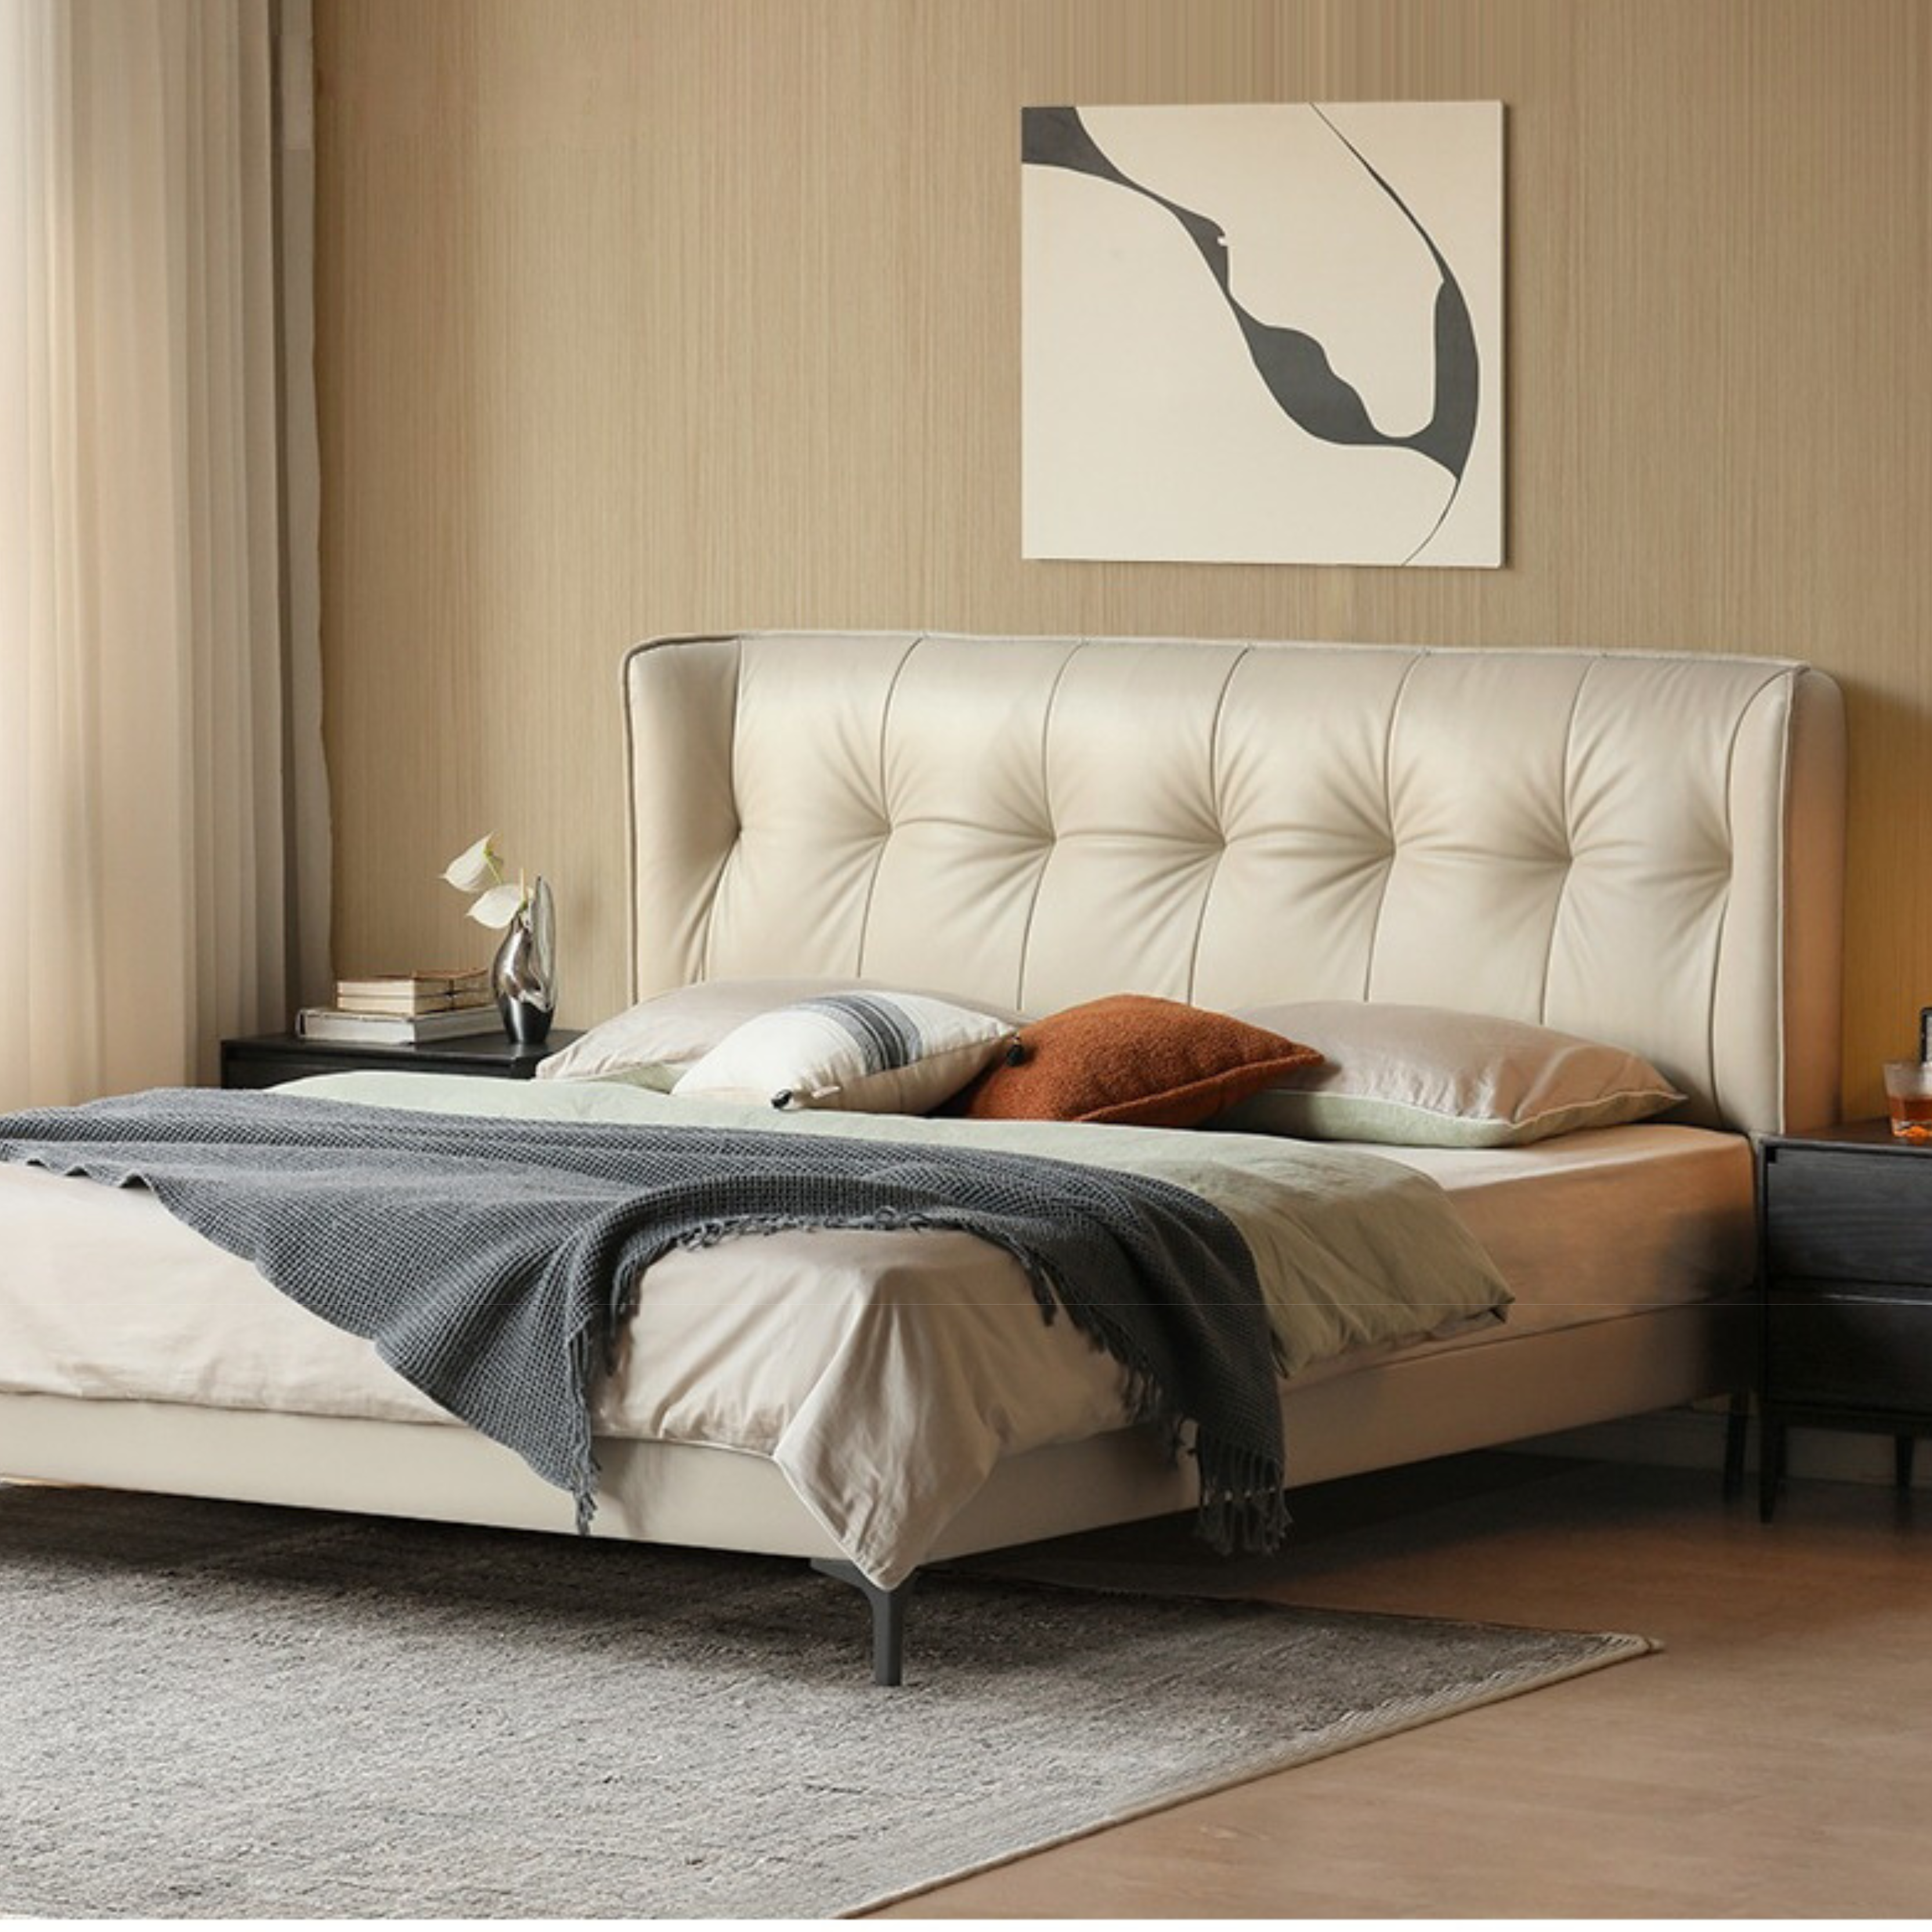 Genuine Leather Light Luxury Edge Bed, Wedding Bed"